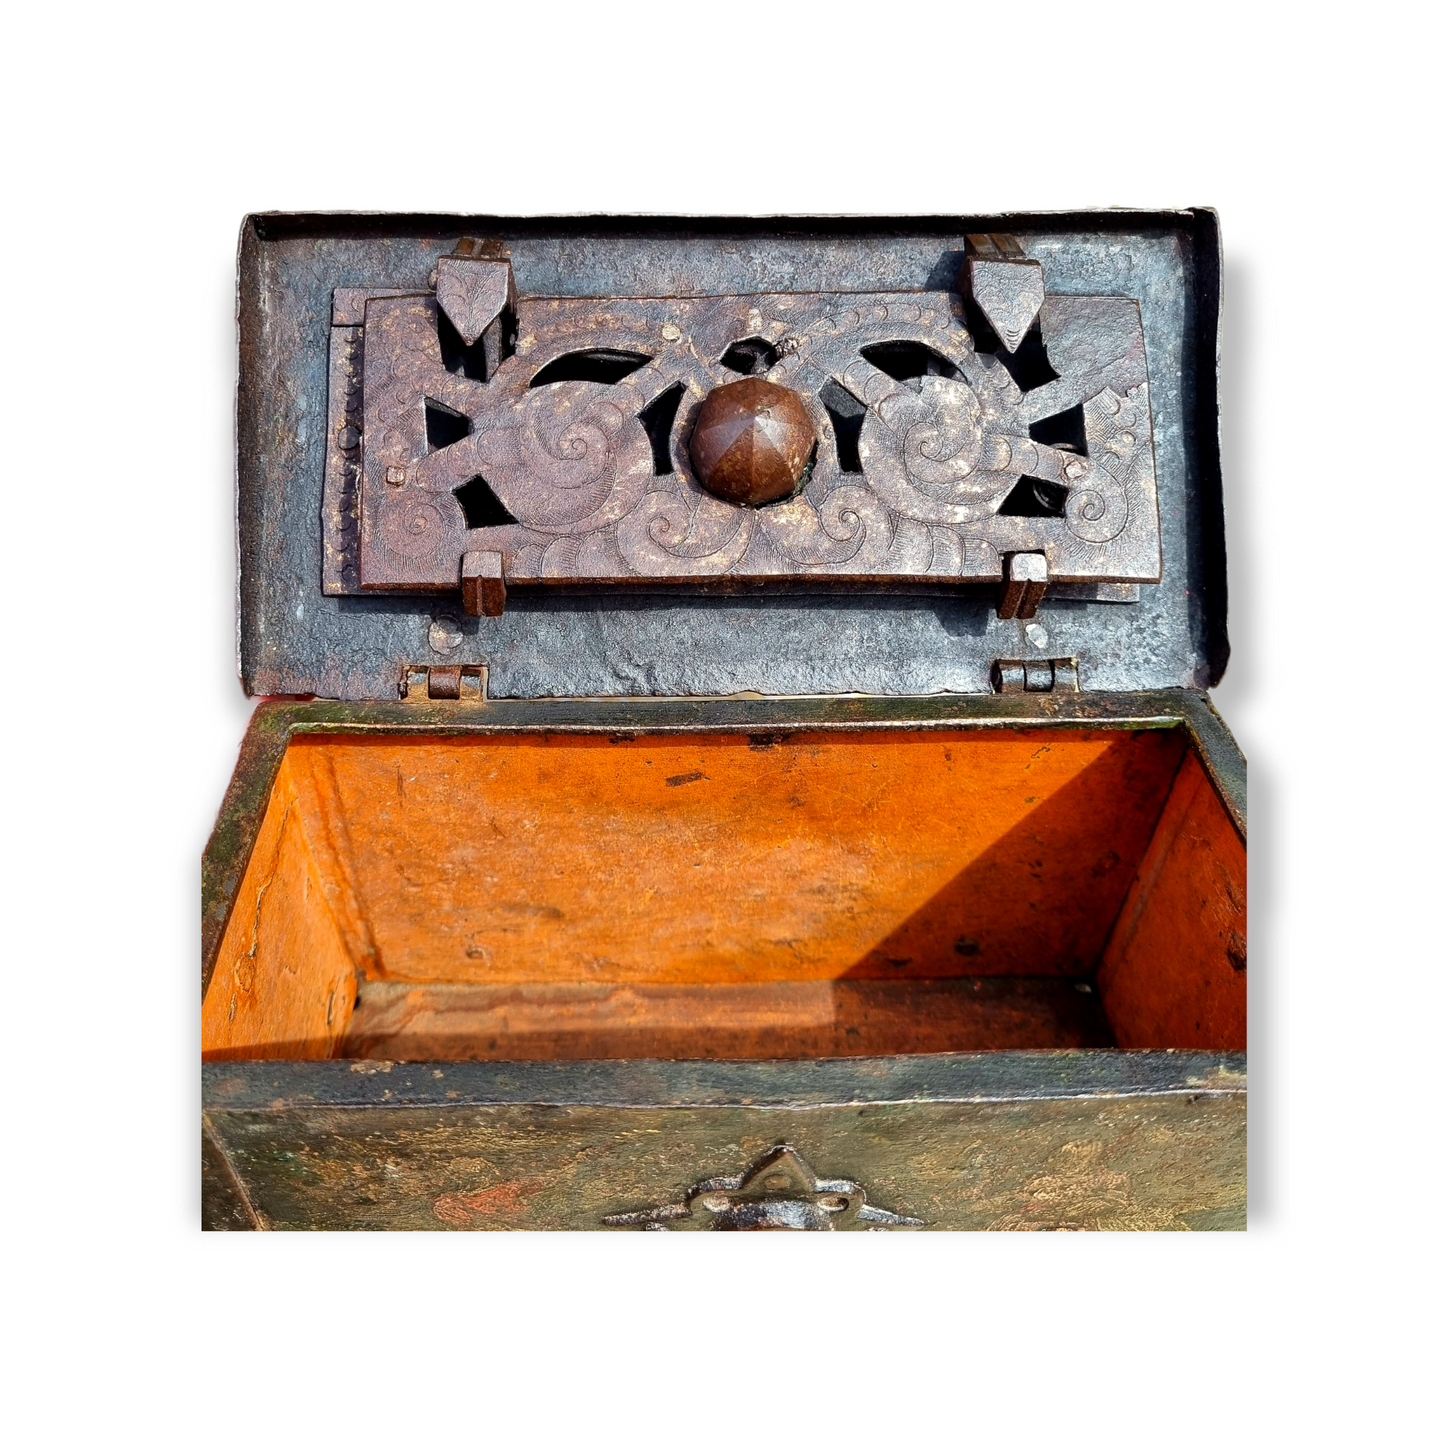 Rare Late16th Century / Early 17th Century German Antique Iron Nuremberg-Made Miniature Table Casket / Strongbox